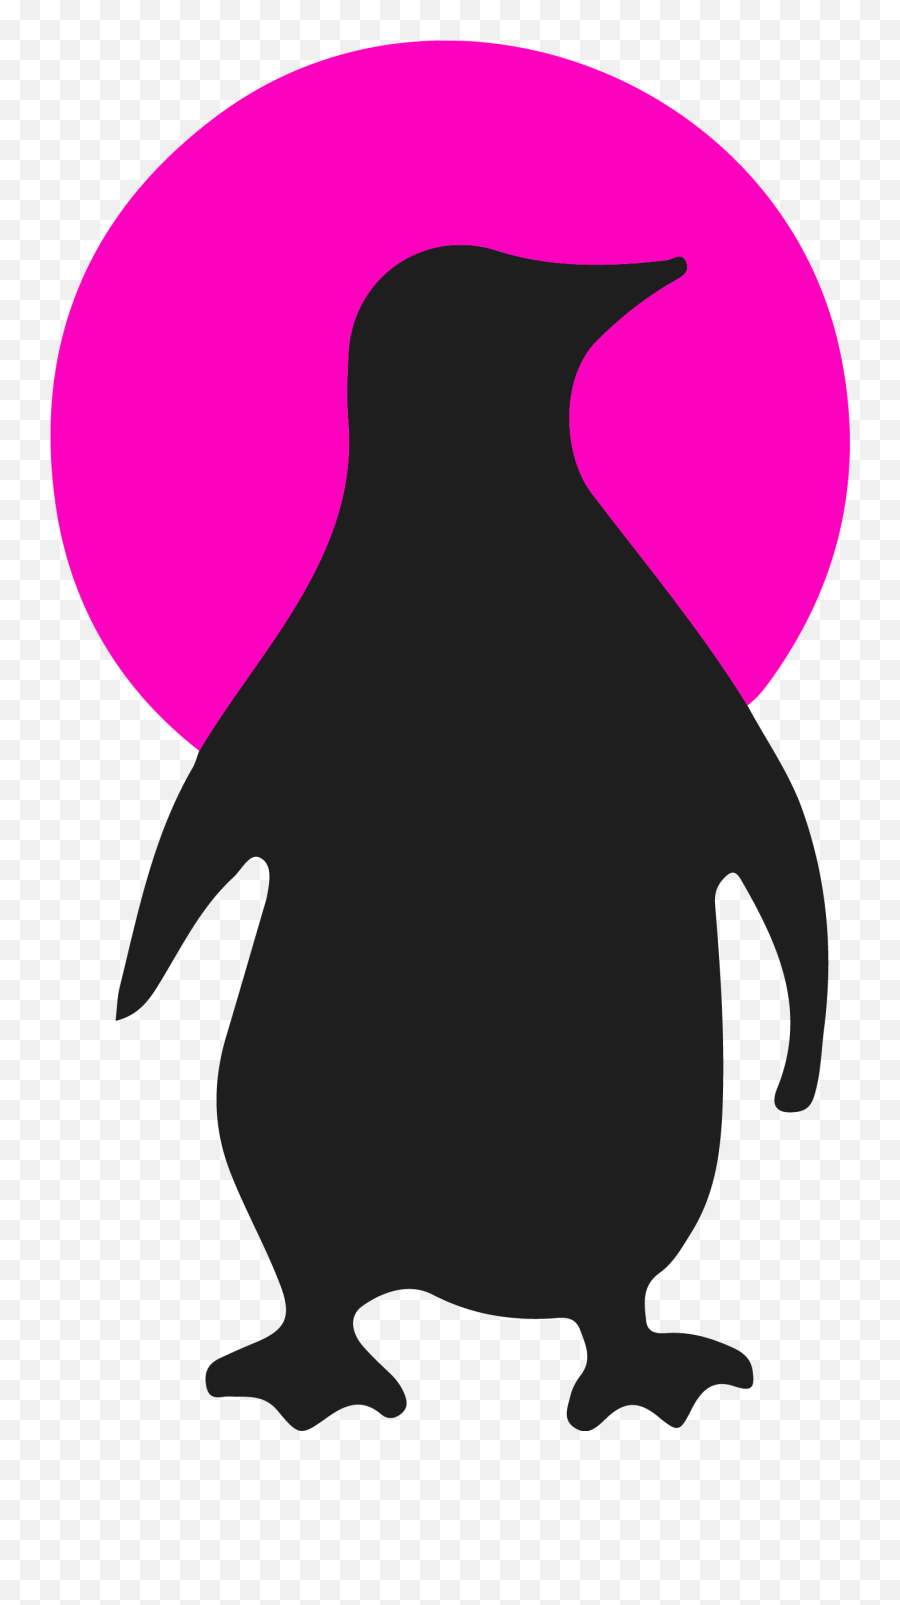 Artist Management Contract 2020 Pdf - Penguin Silhouette Png,Retrowave Icon